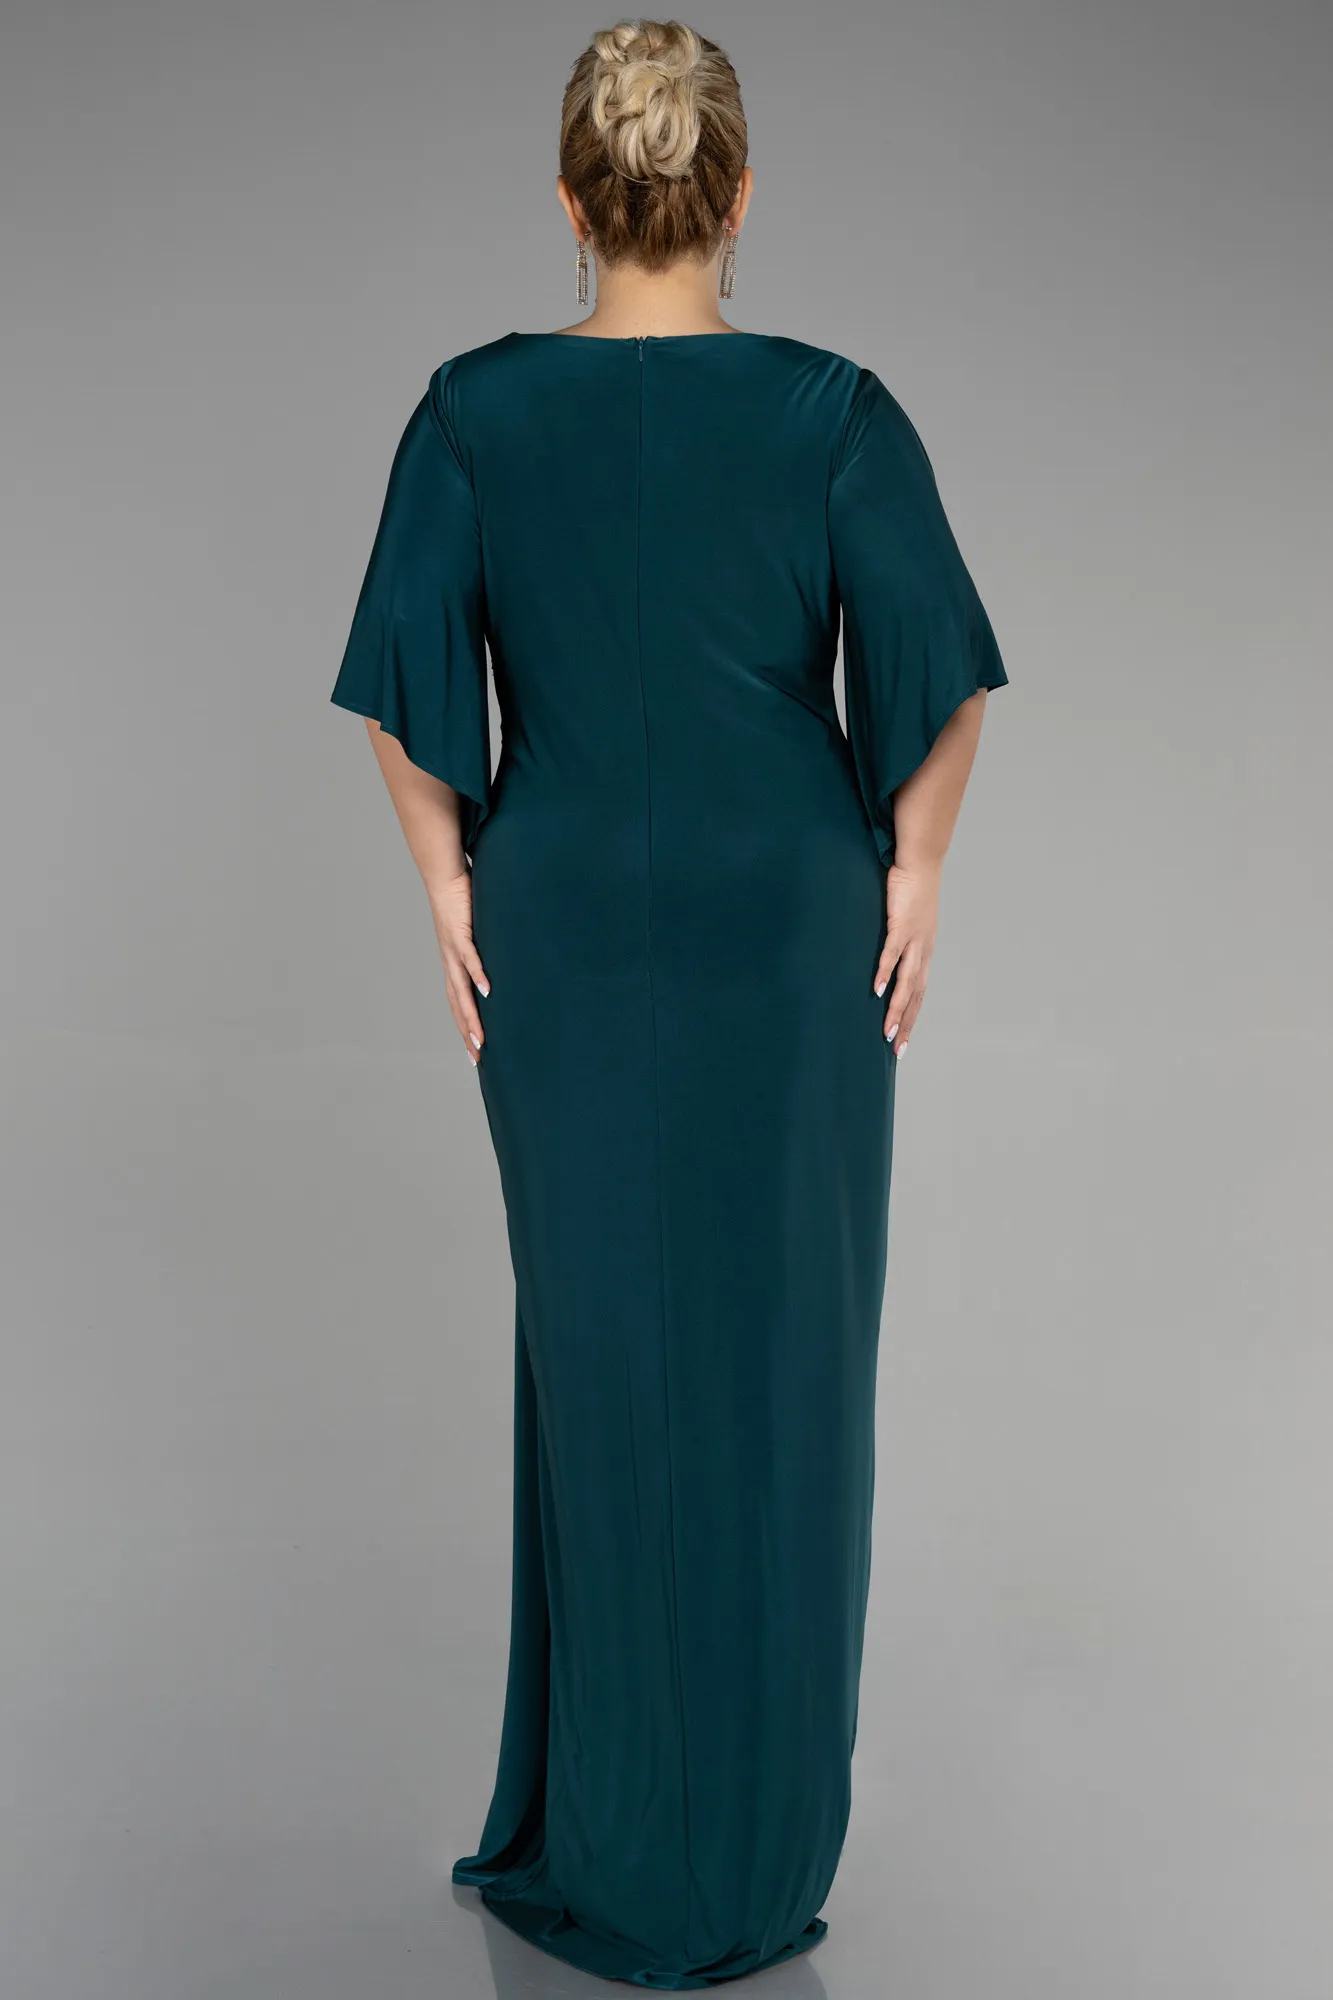 Emerald Green-Long Plus Size Evening Dress ABU3470